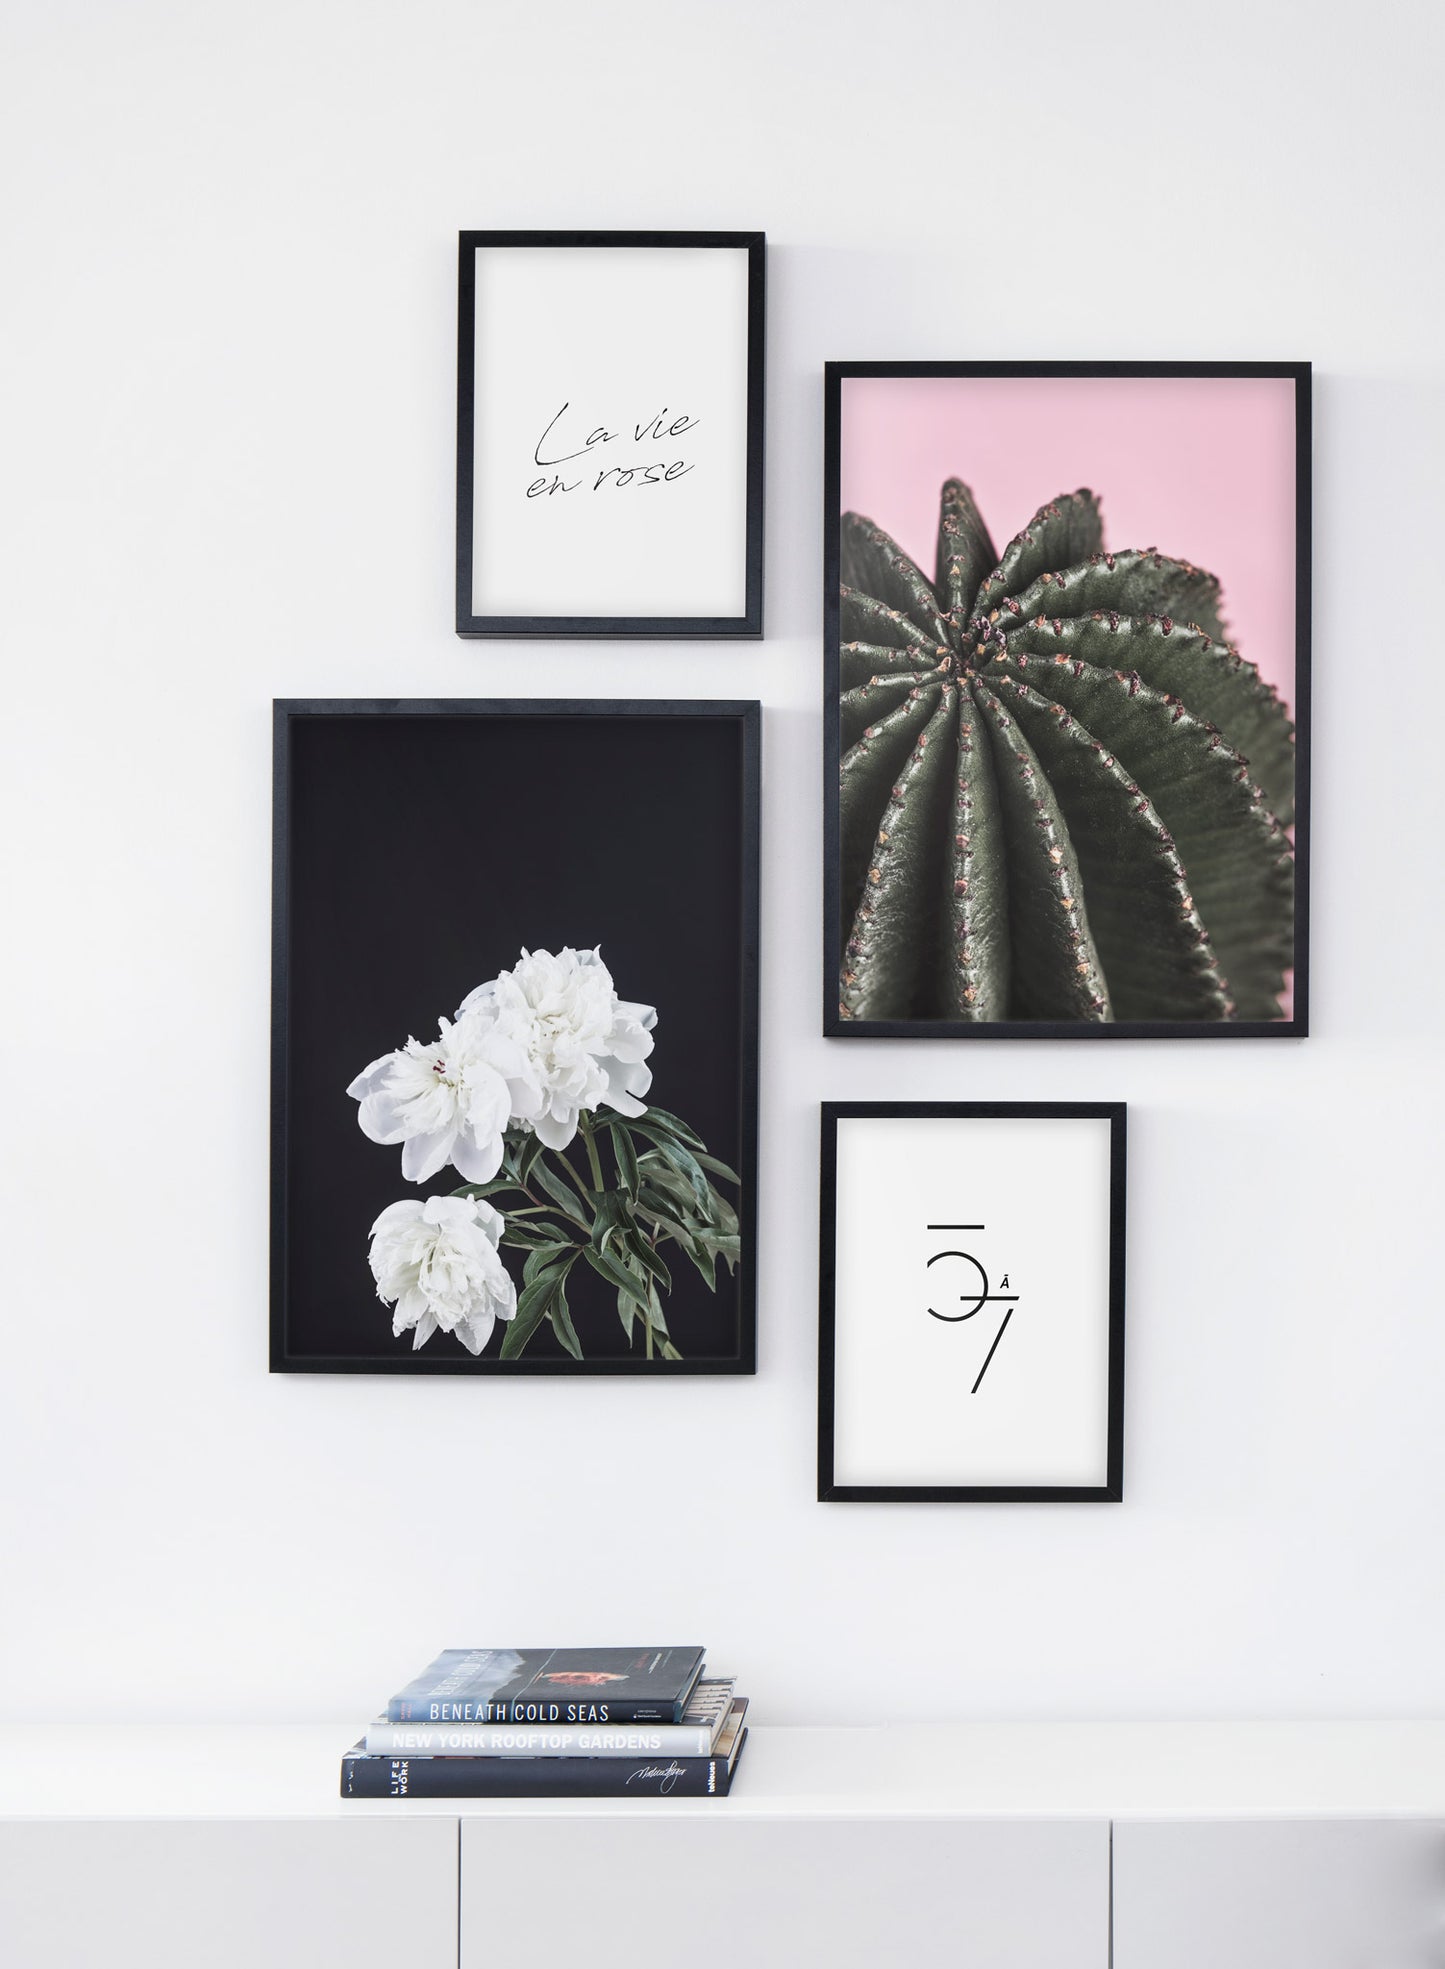 Scandinavian poster by Opposite Wall with trendy La vie en rose black and white typography design - Living room bookshelf